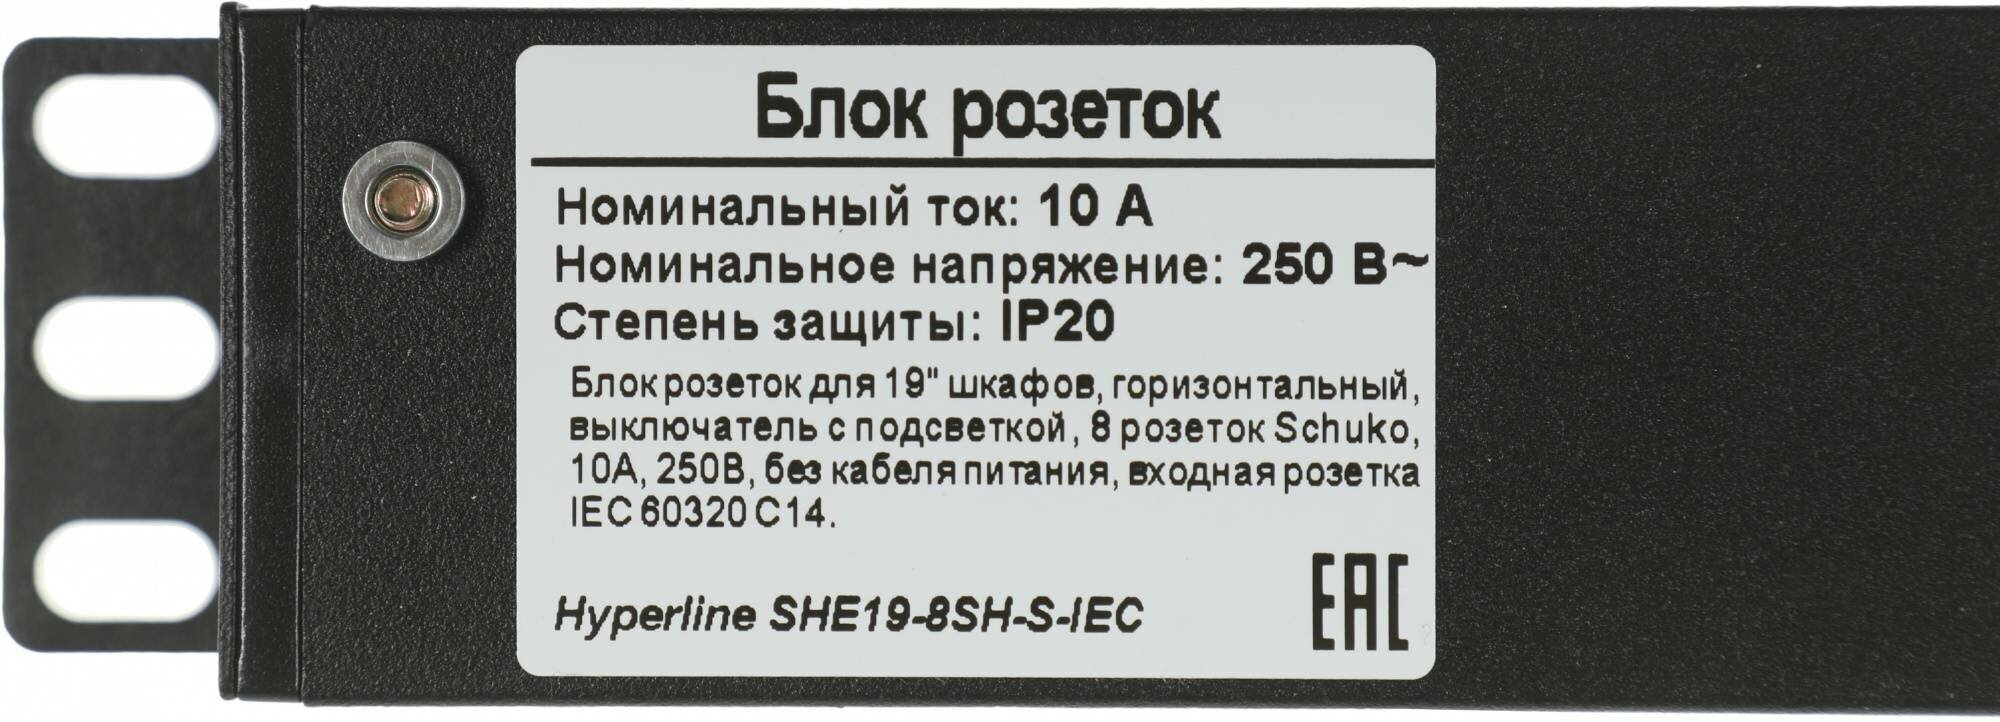 Schuko Блок розеток 19 250В 1U 10А 8 розеток с выключателем разъем IEC 60320 C14 алюминиевый корпус Hyperline - фото №10